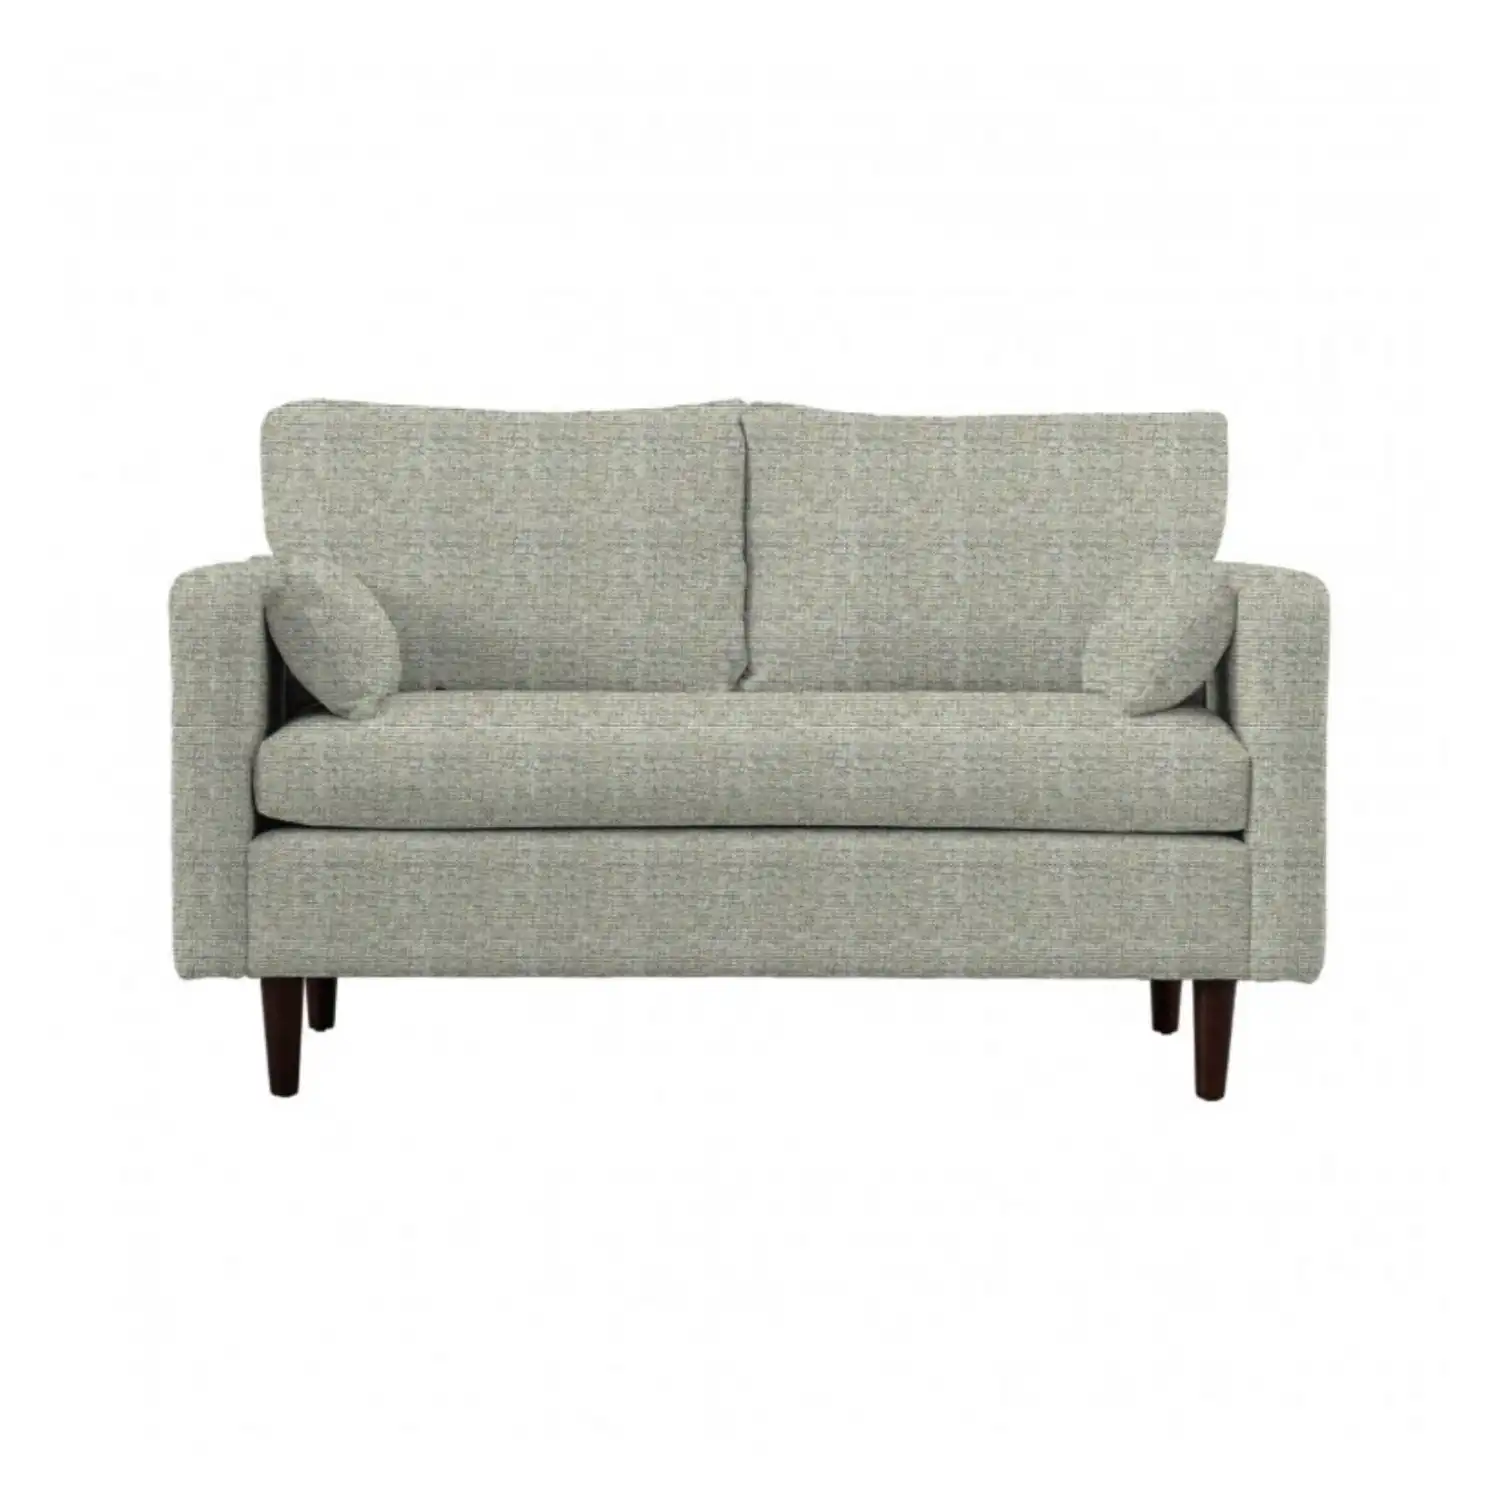 Retro Spring Textured Chenille 2 Seater Sofa